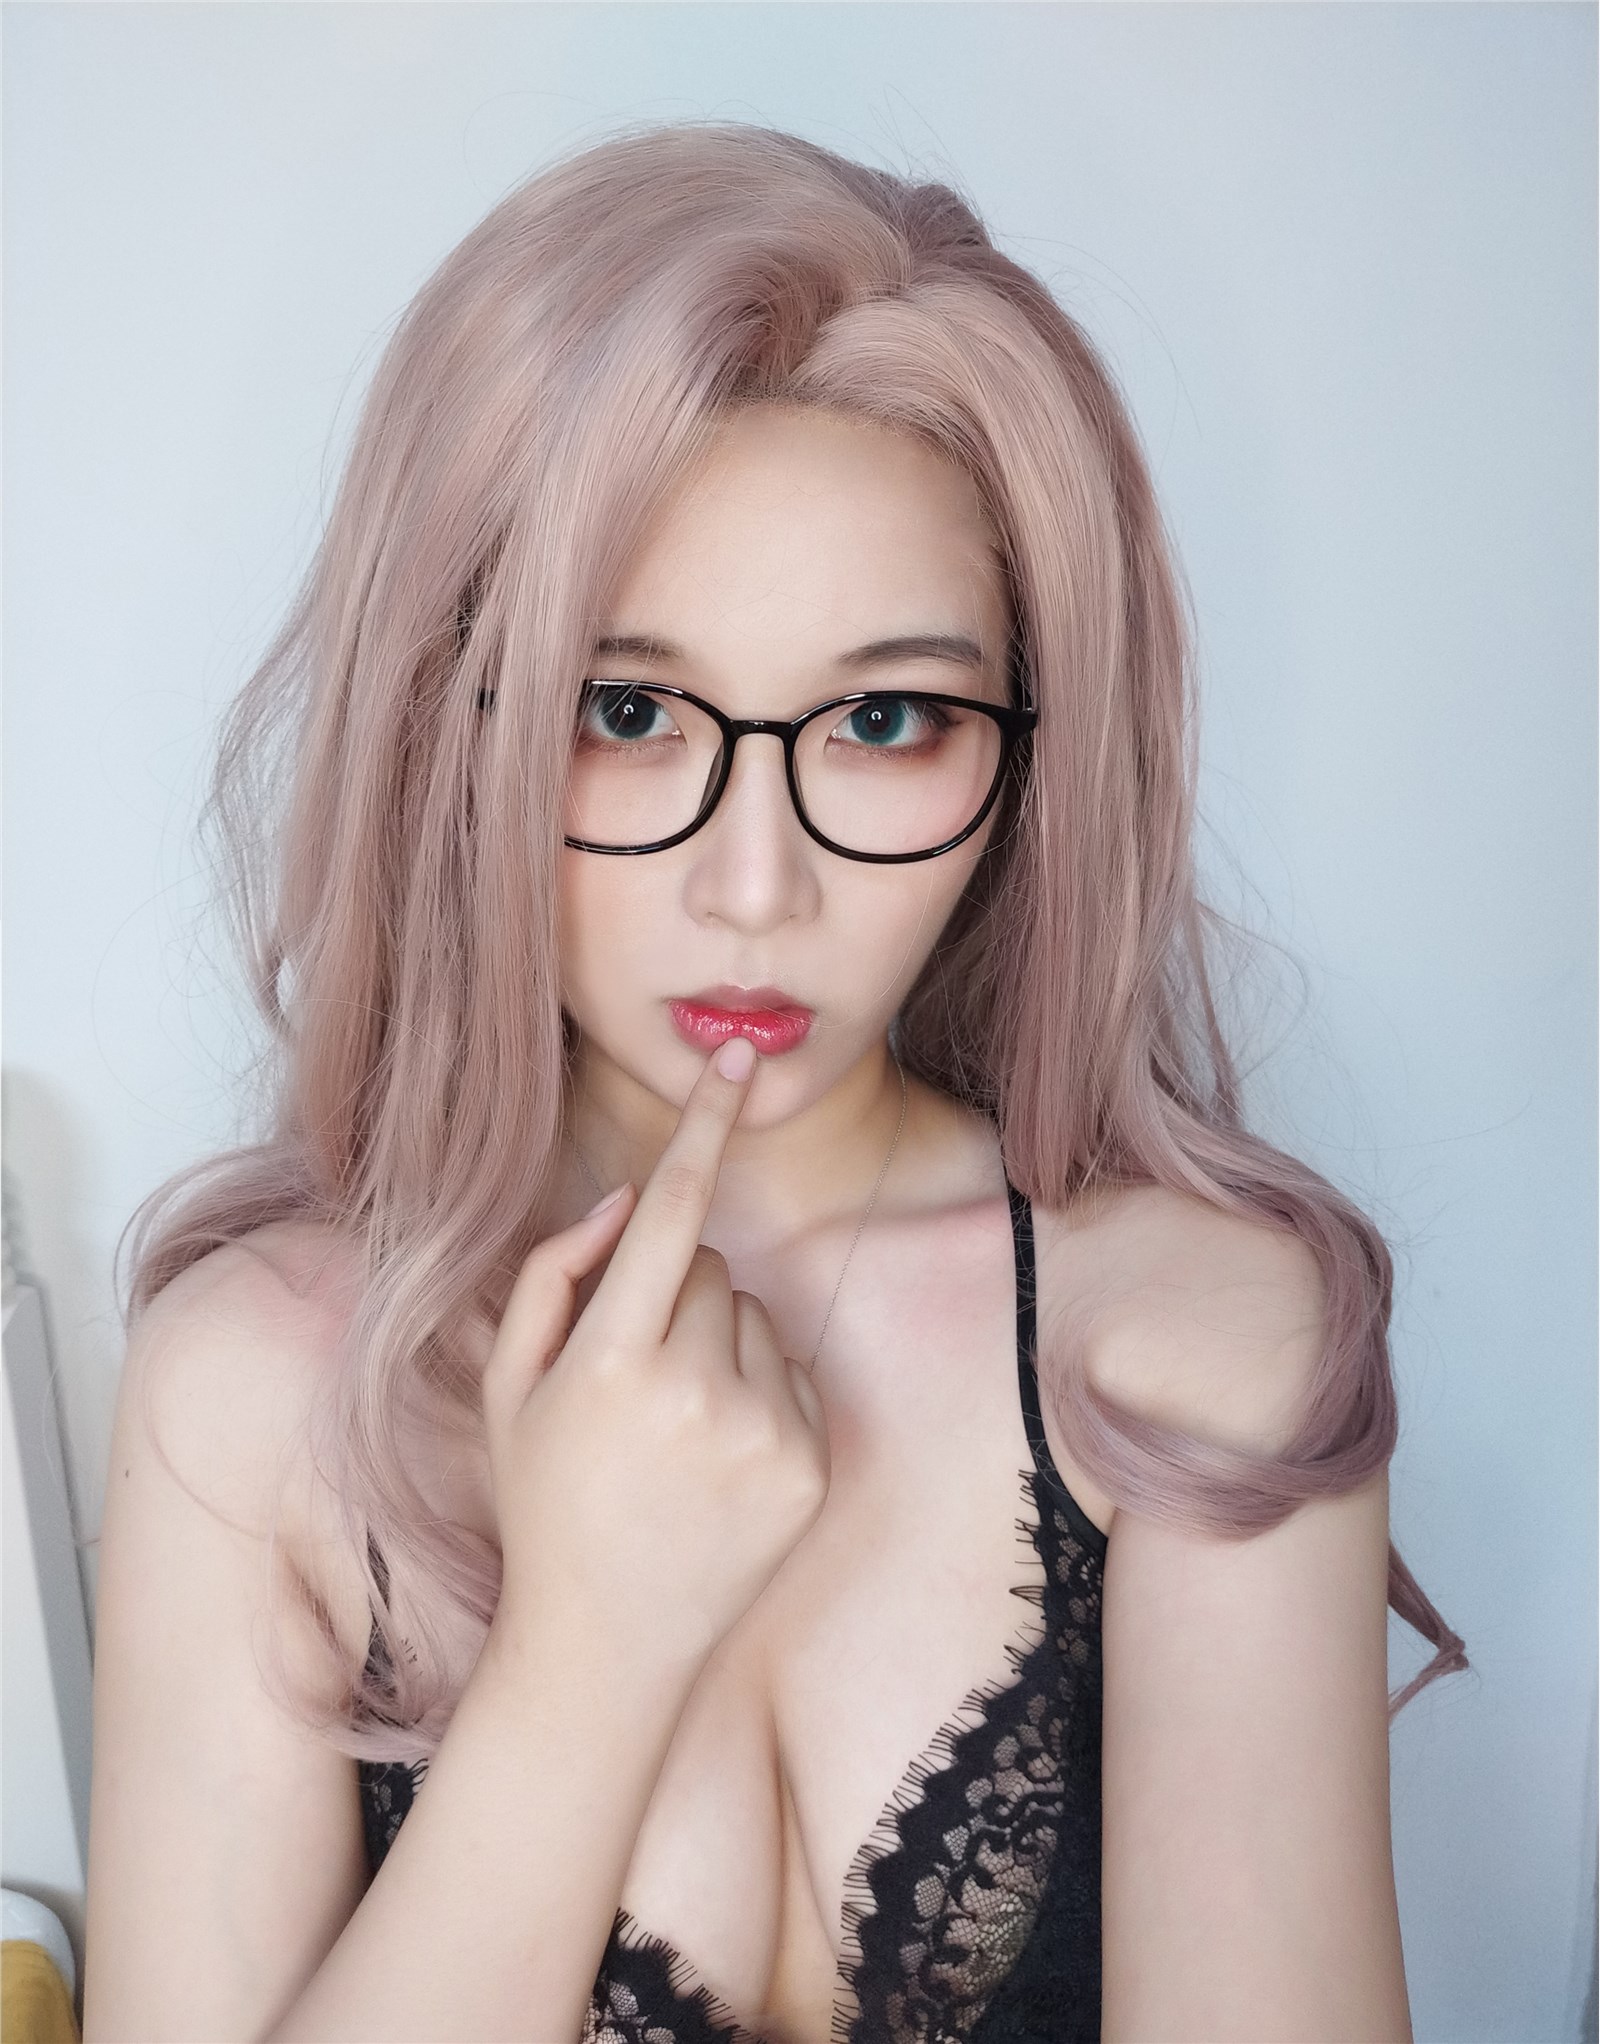 Hsuen Hsiao school sister. - Glasses lady(1)